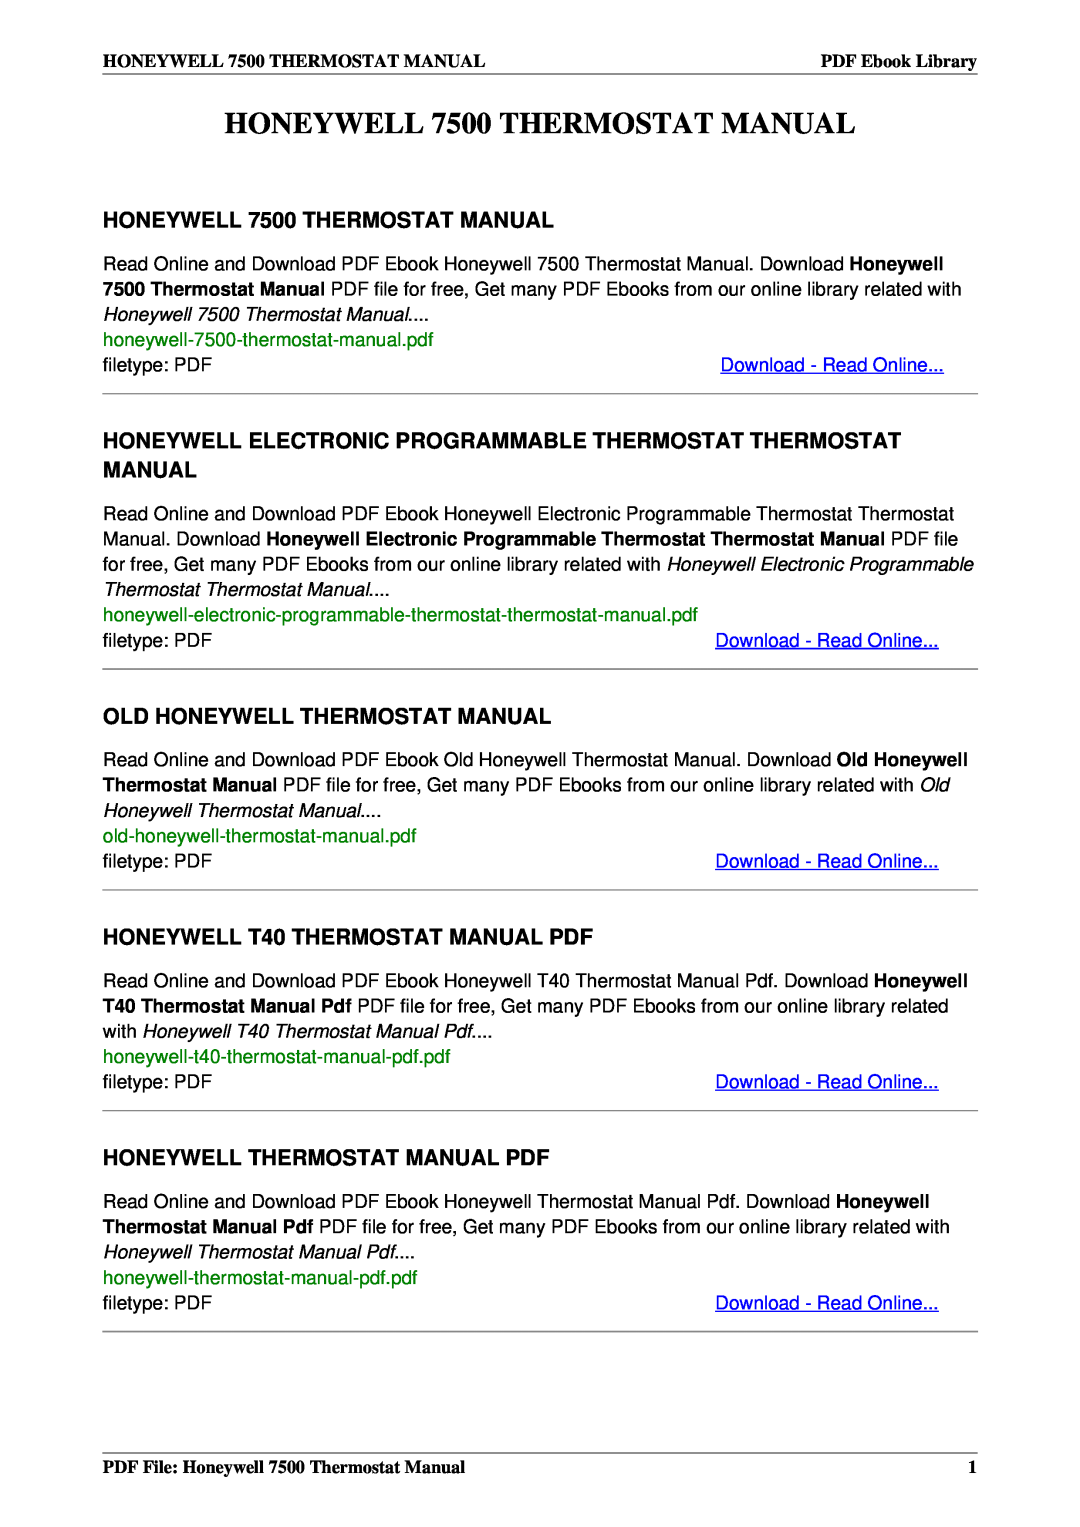 Honeywell manual HONEYWELL 7500 THERMOSTAT MANUAL, Honeywell Electronic Programmable Thermostat Thermostat Manual 